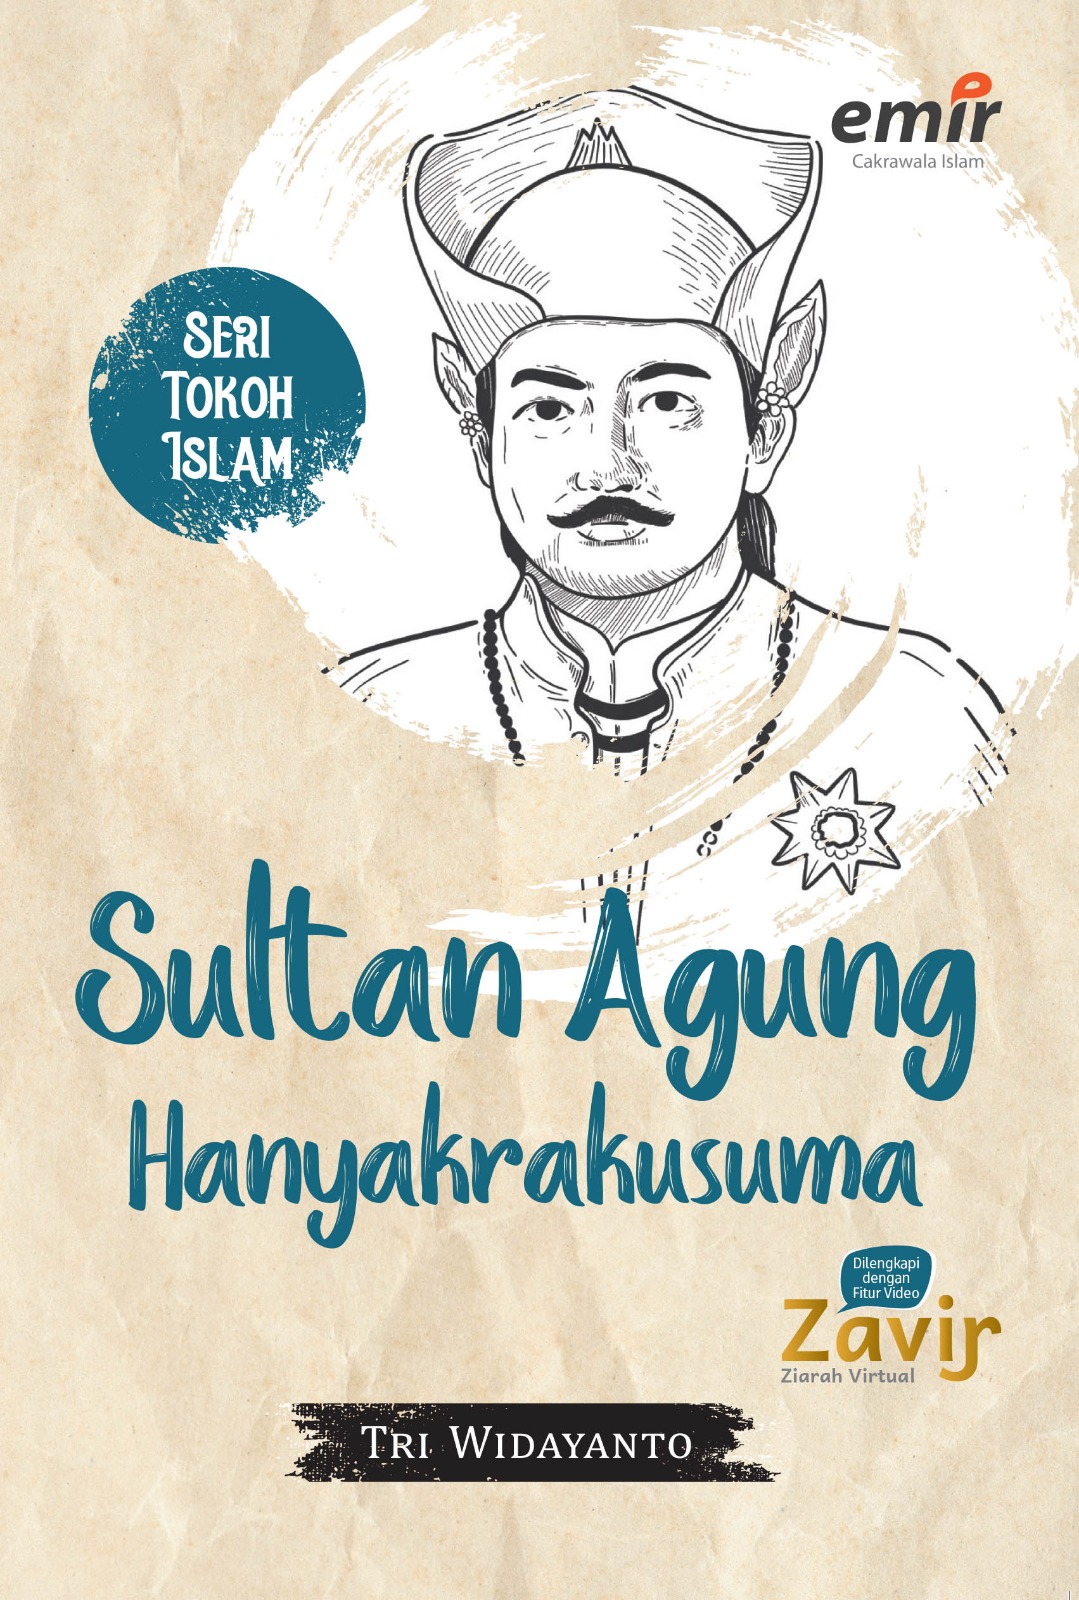 Seri Tokoh Islam: Sultan Agung Hanyakrakusuma